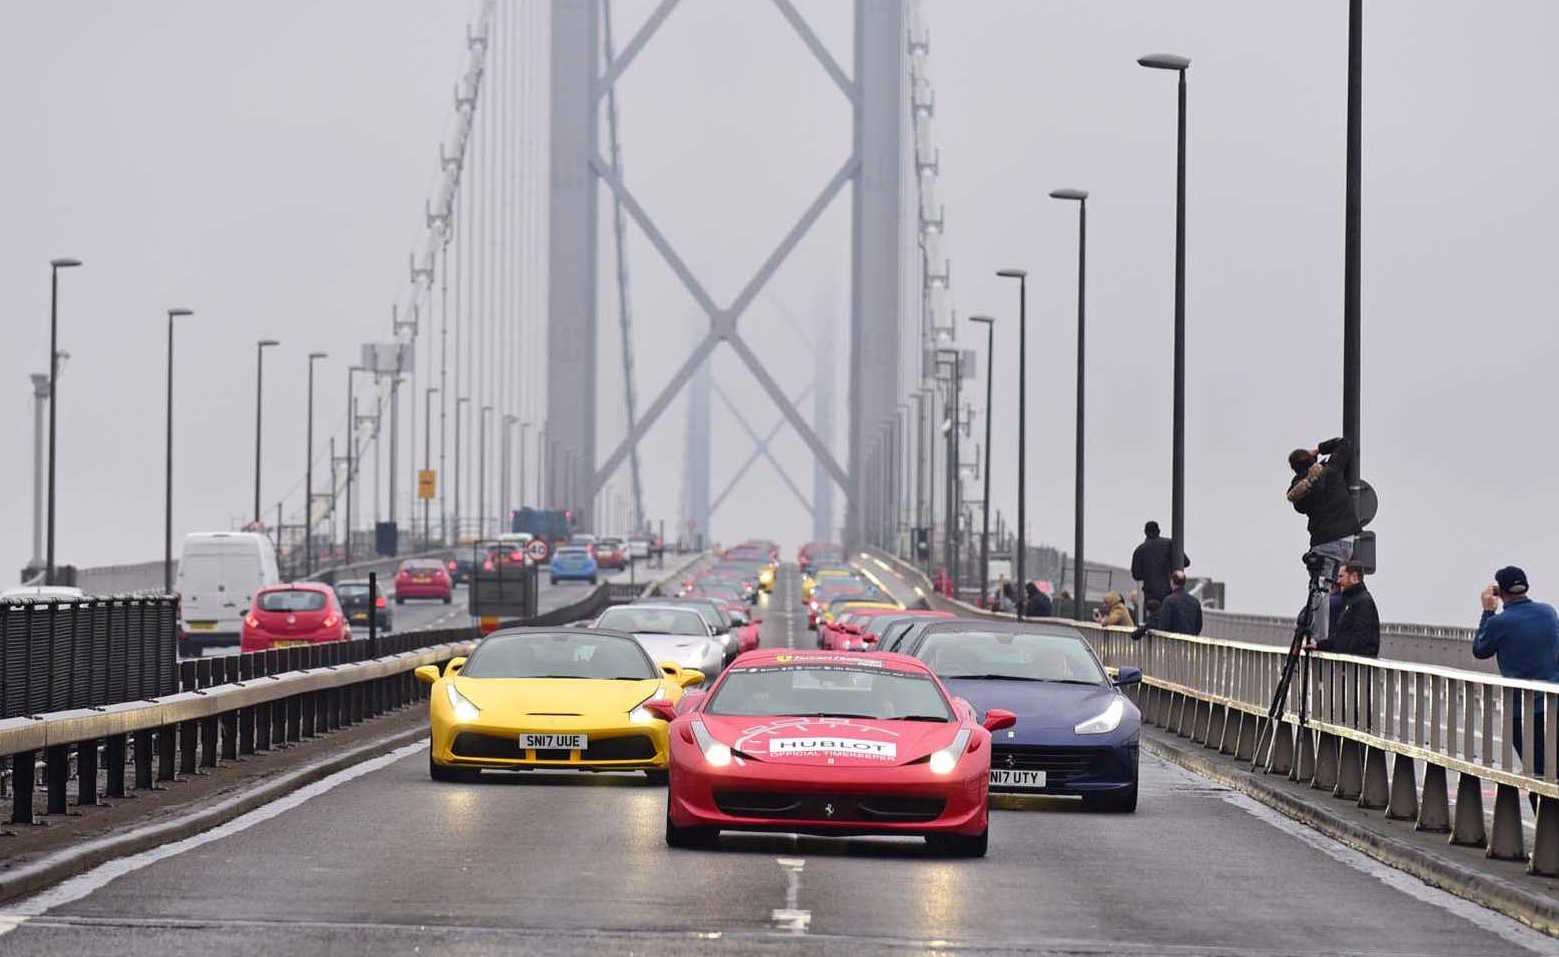 Ferrari parade shuts down bridge to celebrate Owners Club of GB 50th